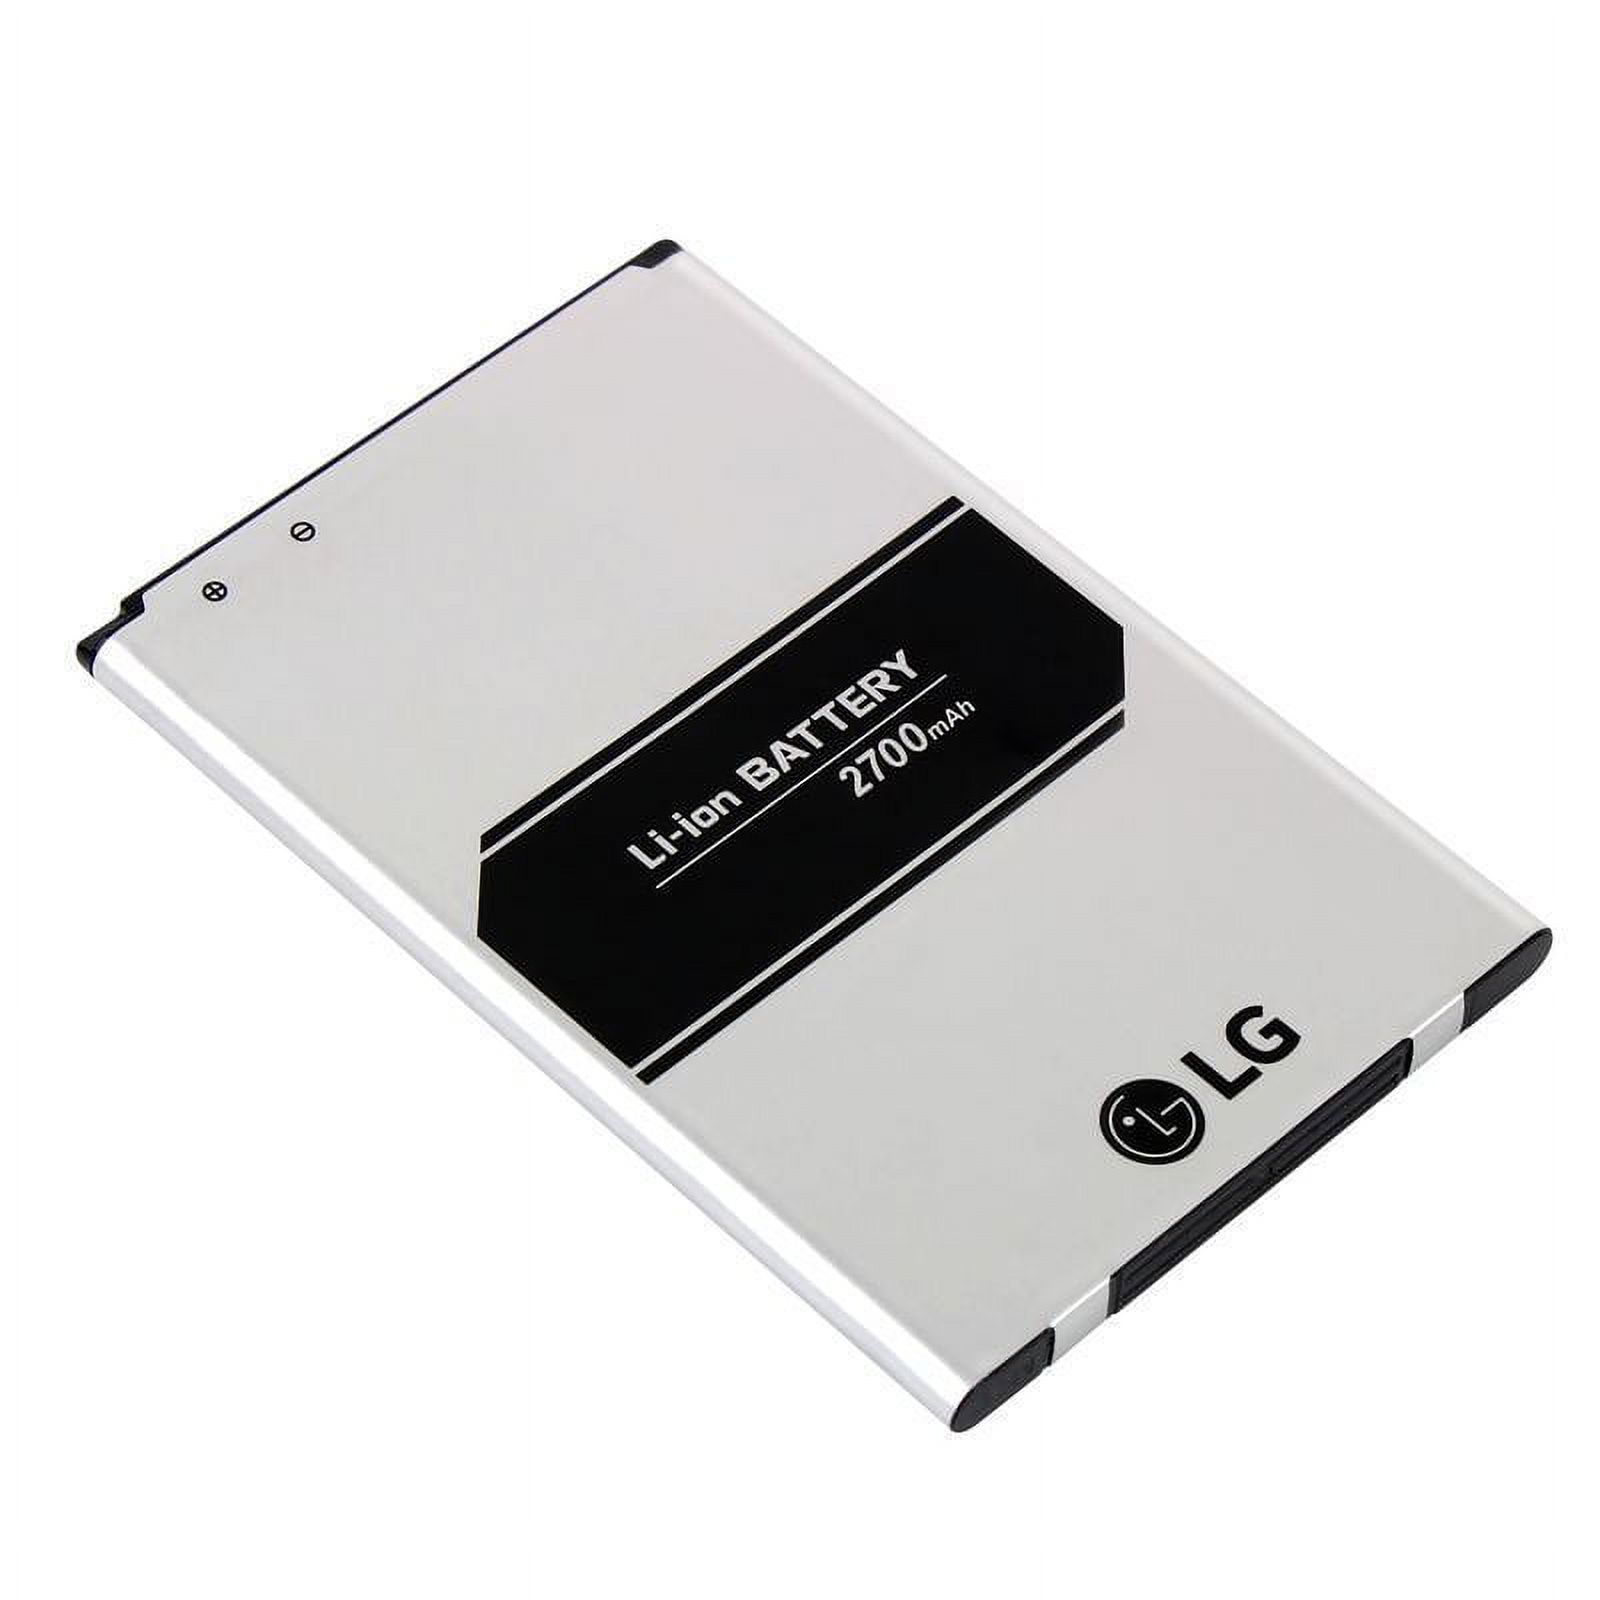 LG OEM Original Cell Phone Battery BL-46G1F Li-ion Battery 2700mAh 10.8Wh 3.85V EAC63418207 YBY For For LG 2017 K20 Plus K20, K20 V, Harmony, LV532GB - image 2 of 2